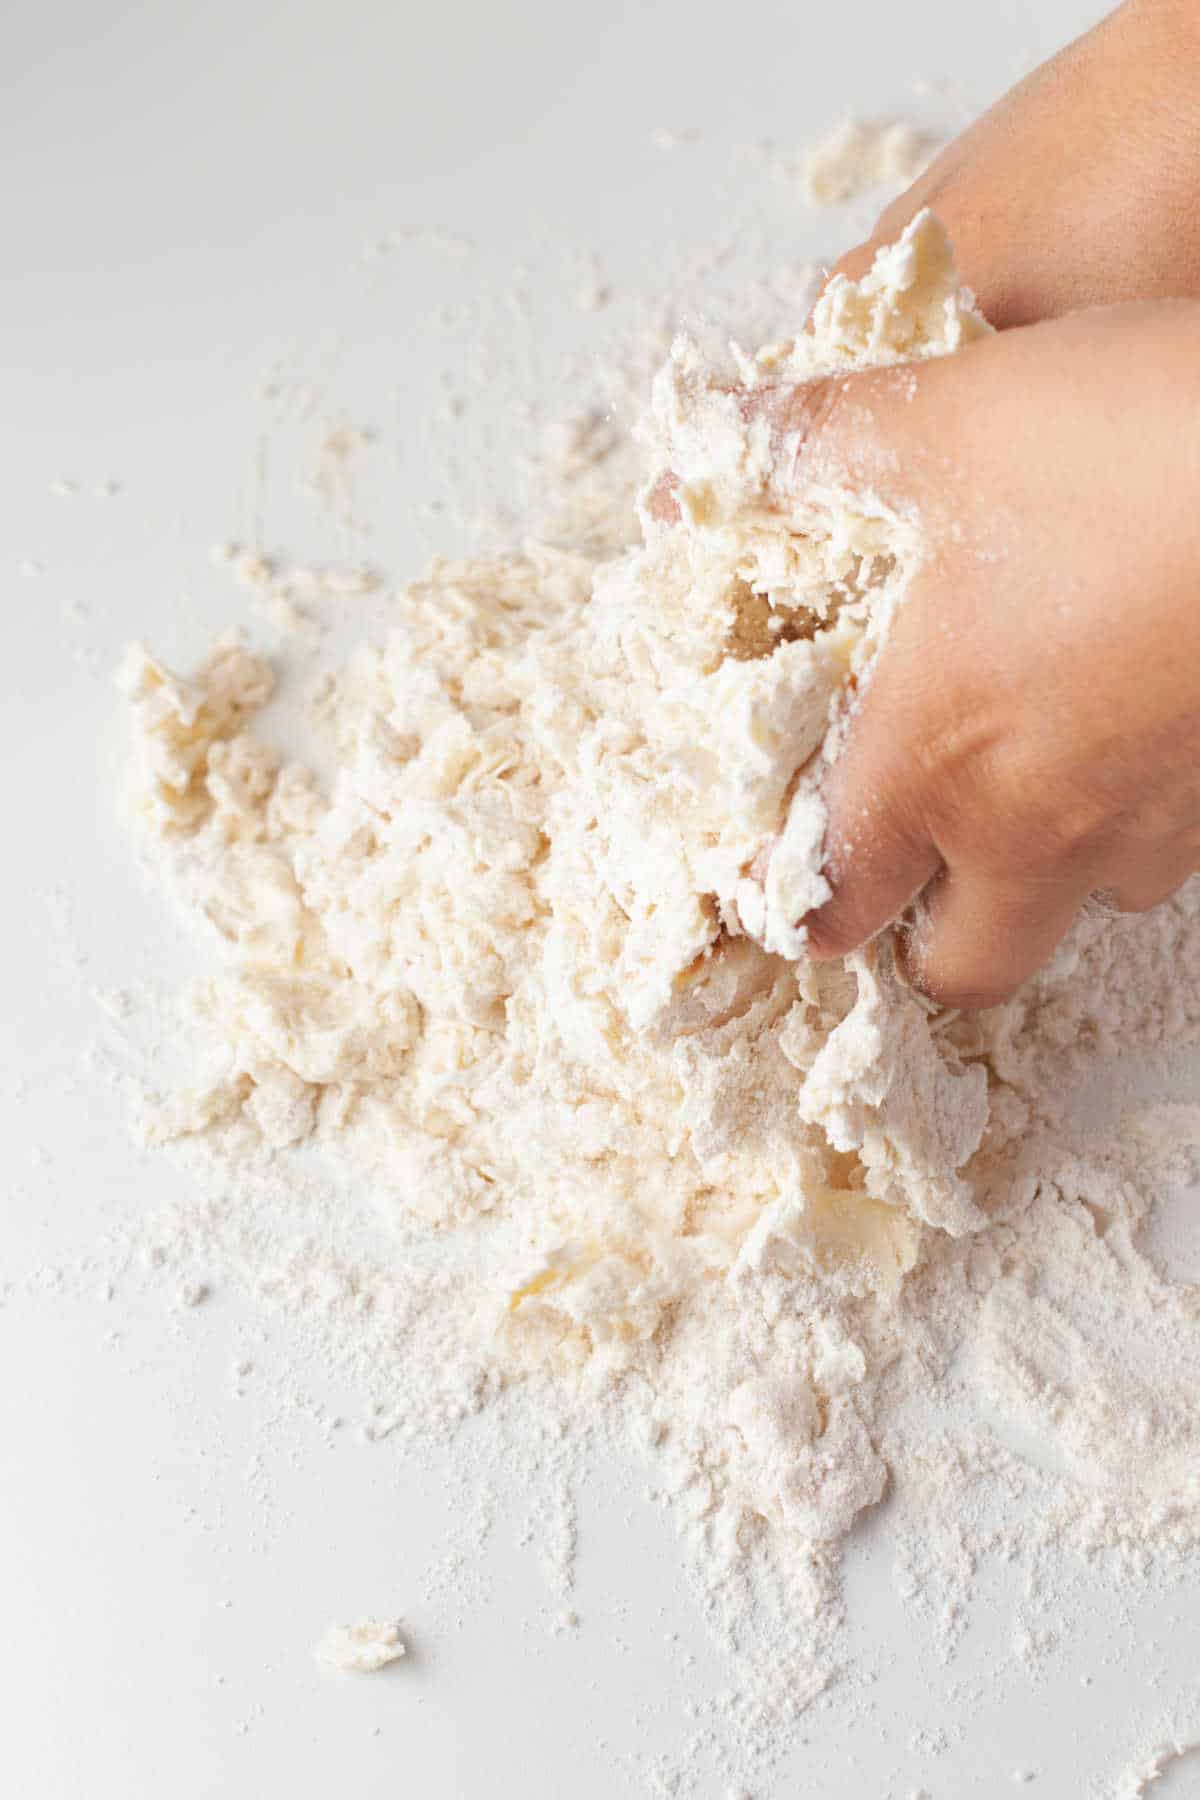 Hands mixing butter into flour and salt. 